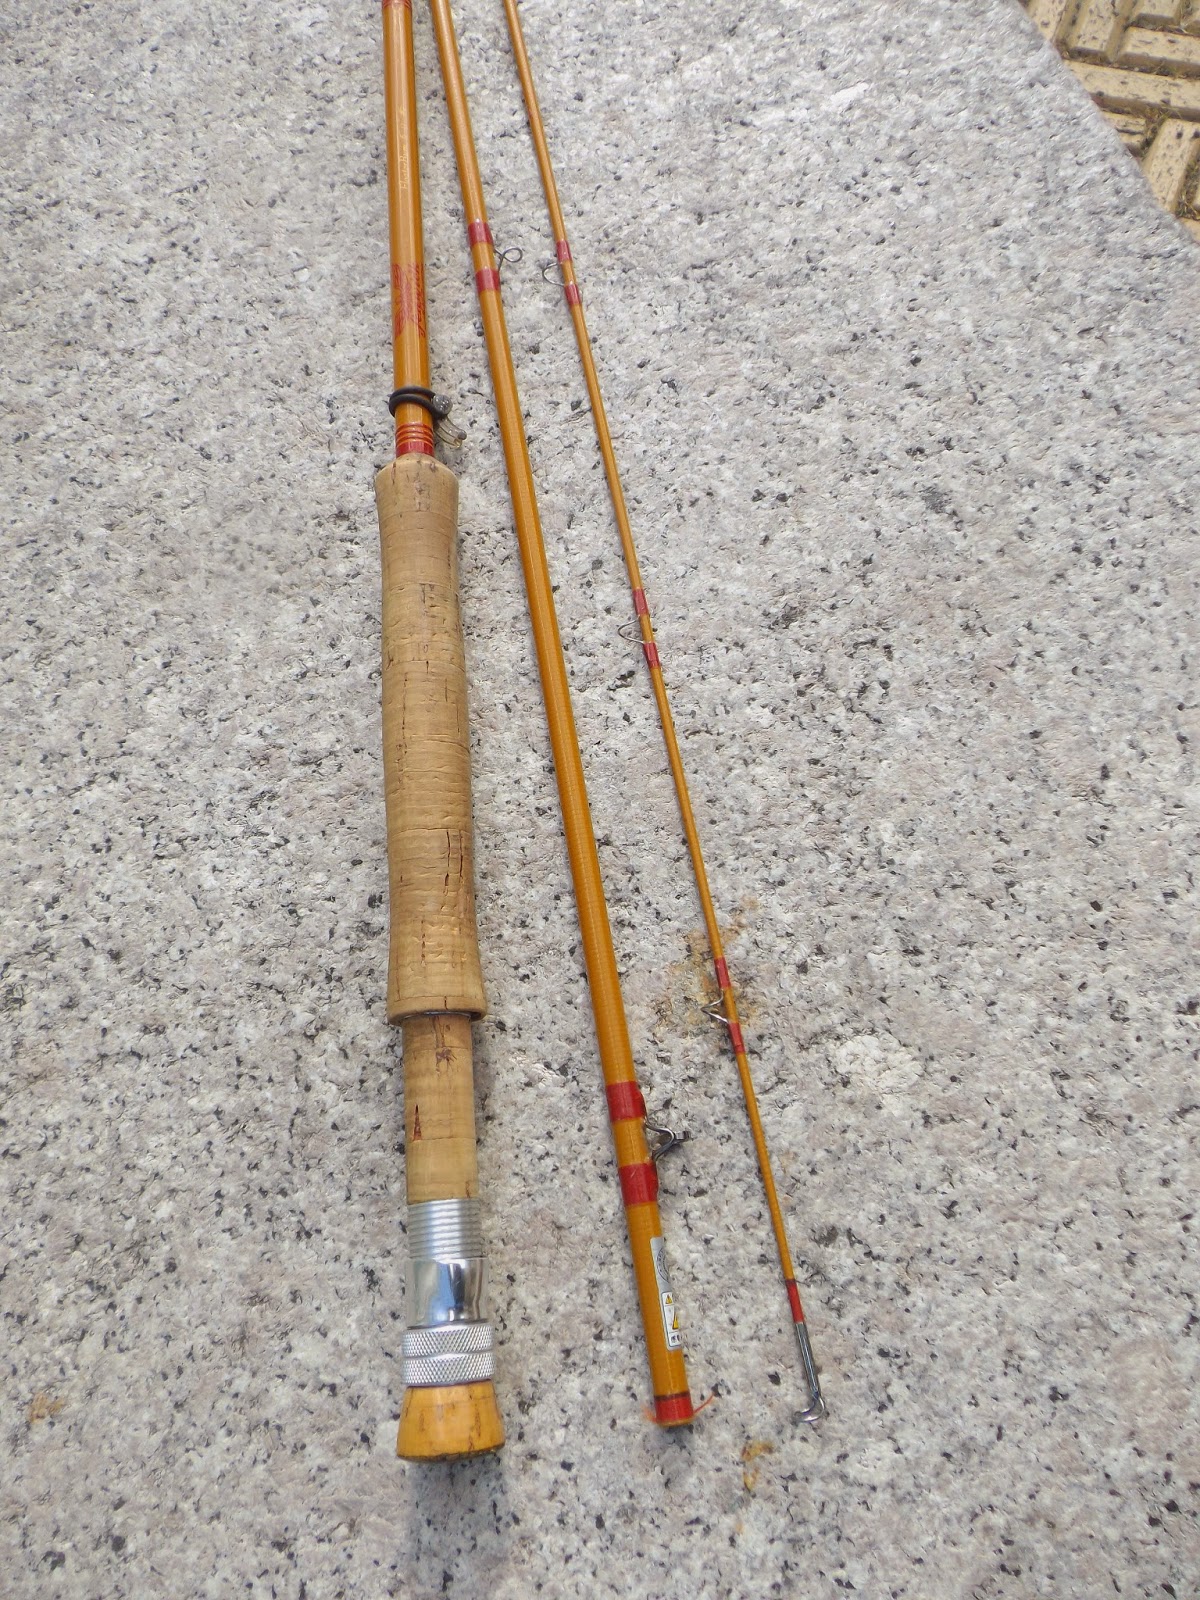 Sol Duc River, Washington, Fishing with Fiberglass Fly Rods